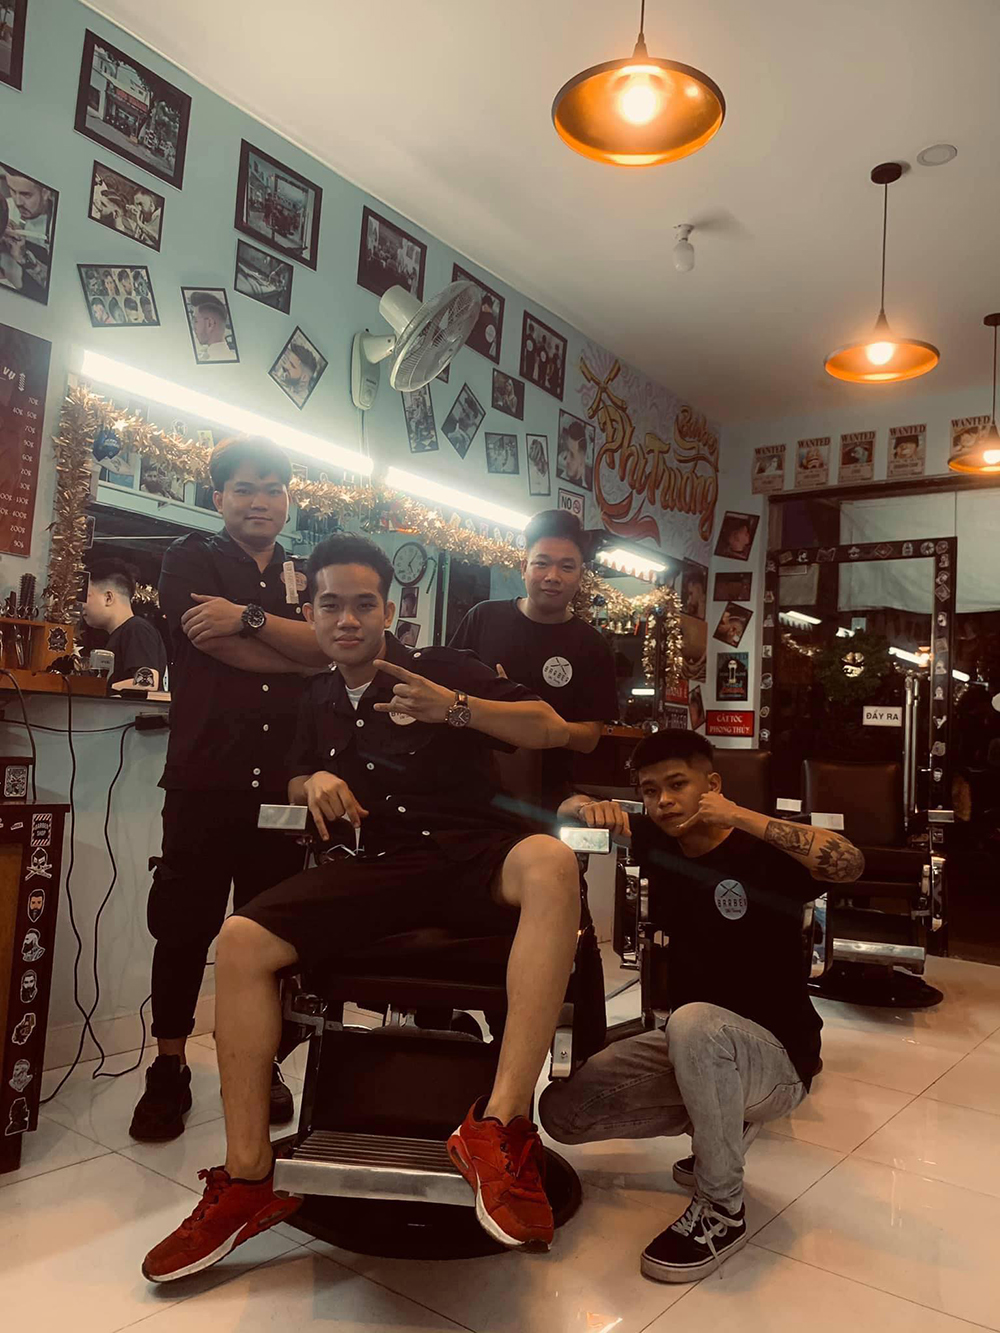 dong phuc nhan vien barbershop phi truong